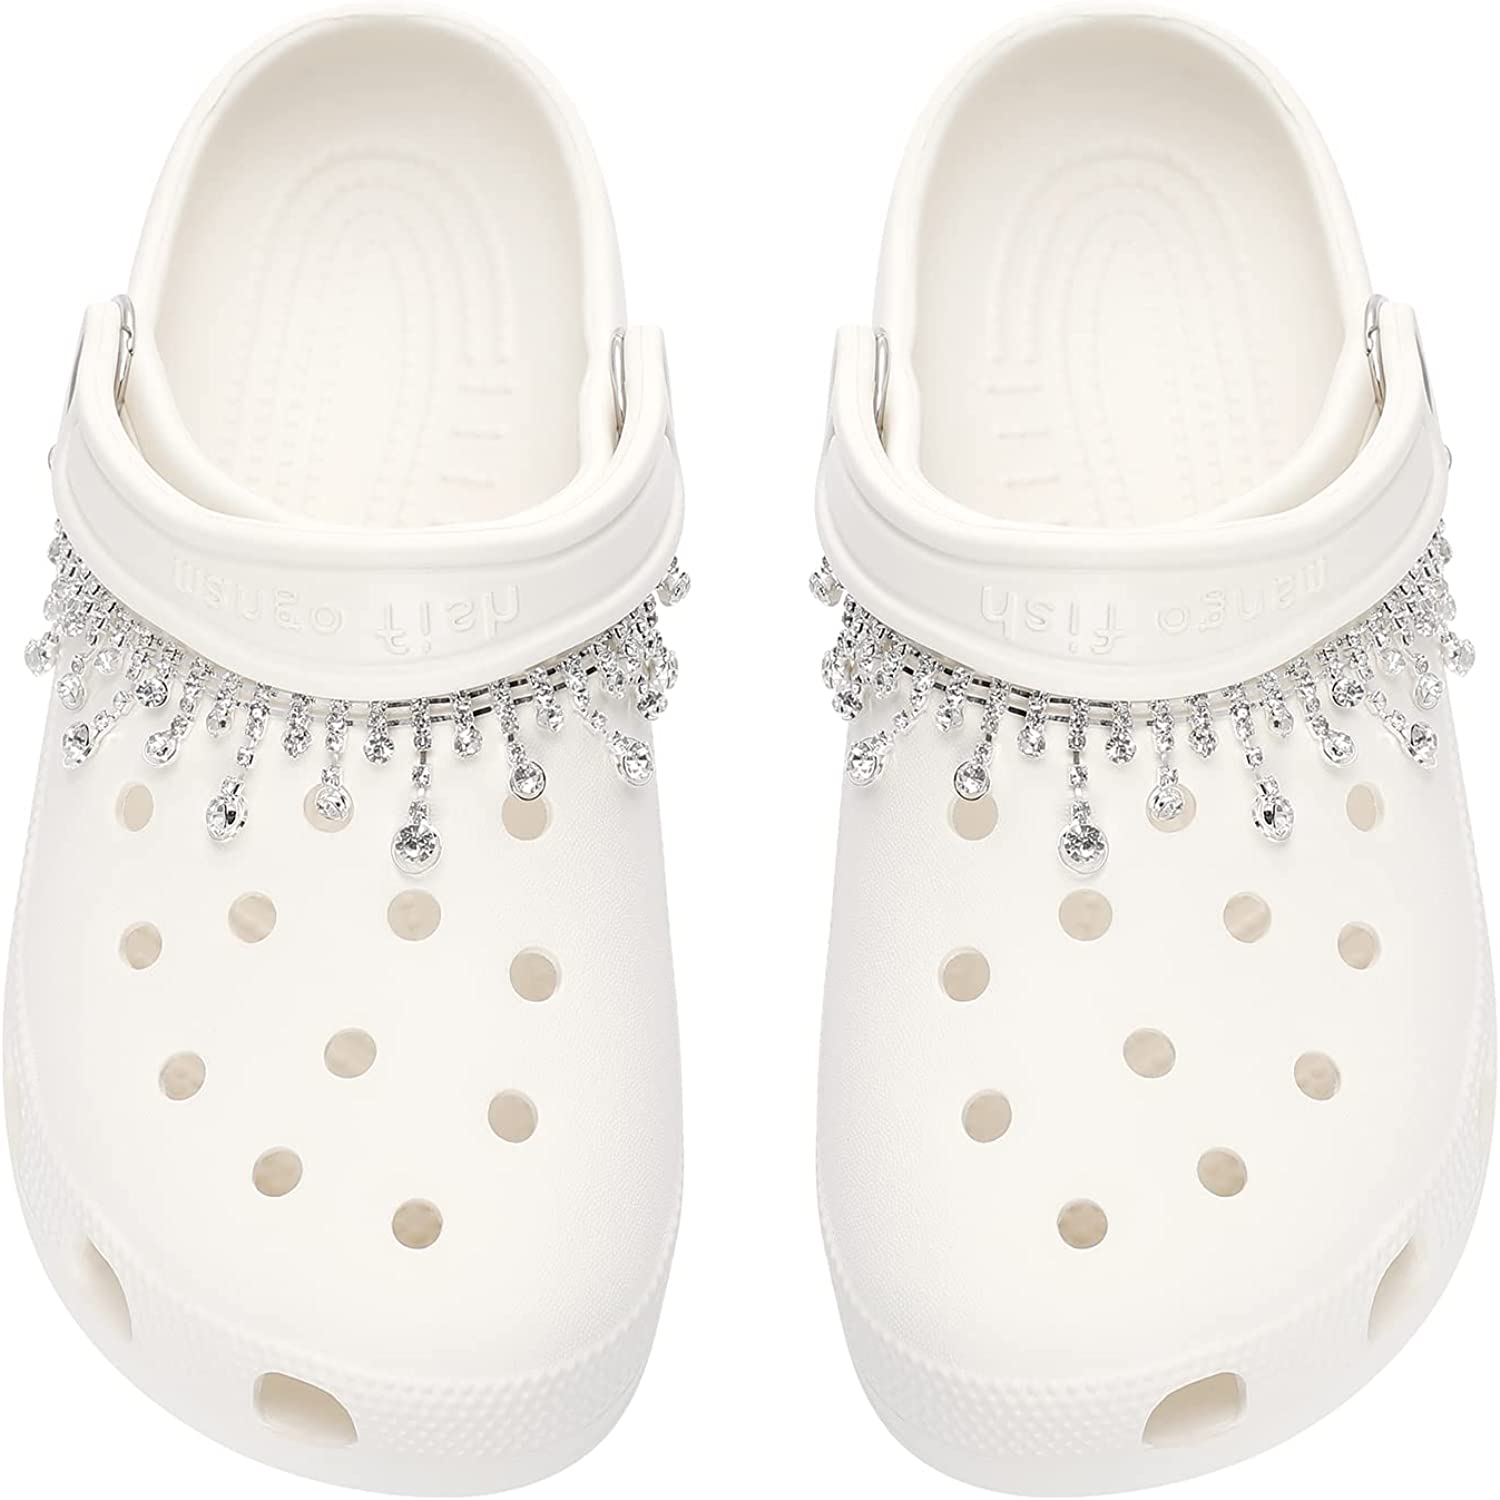  26 40Pcs Summer Shoe Charms for Clog Sandals Bracelets